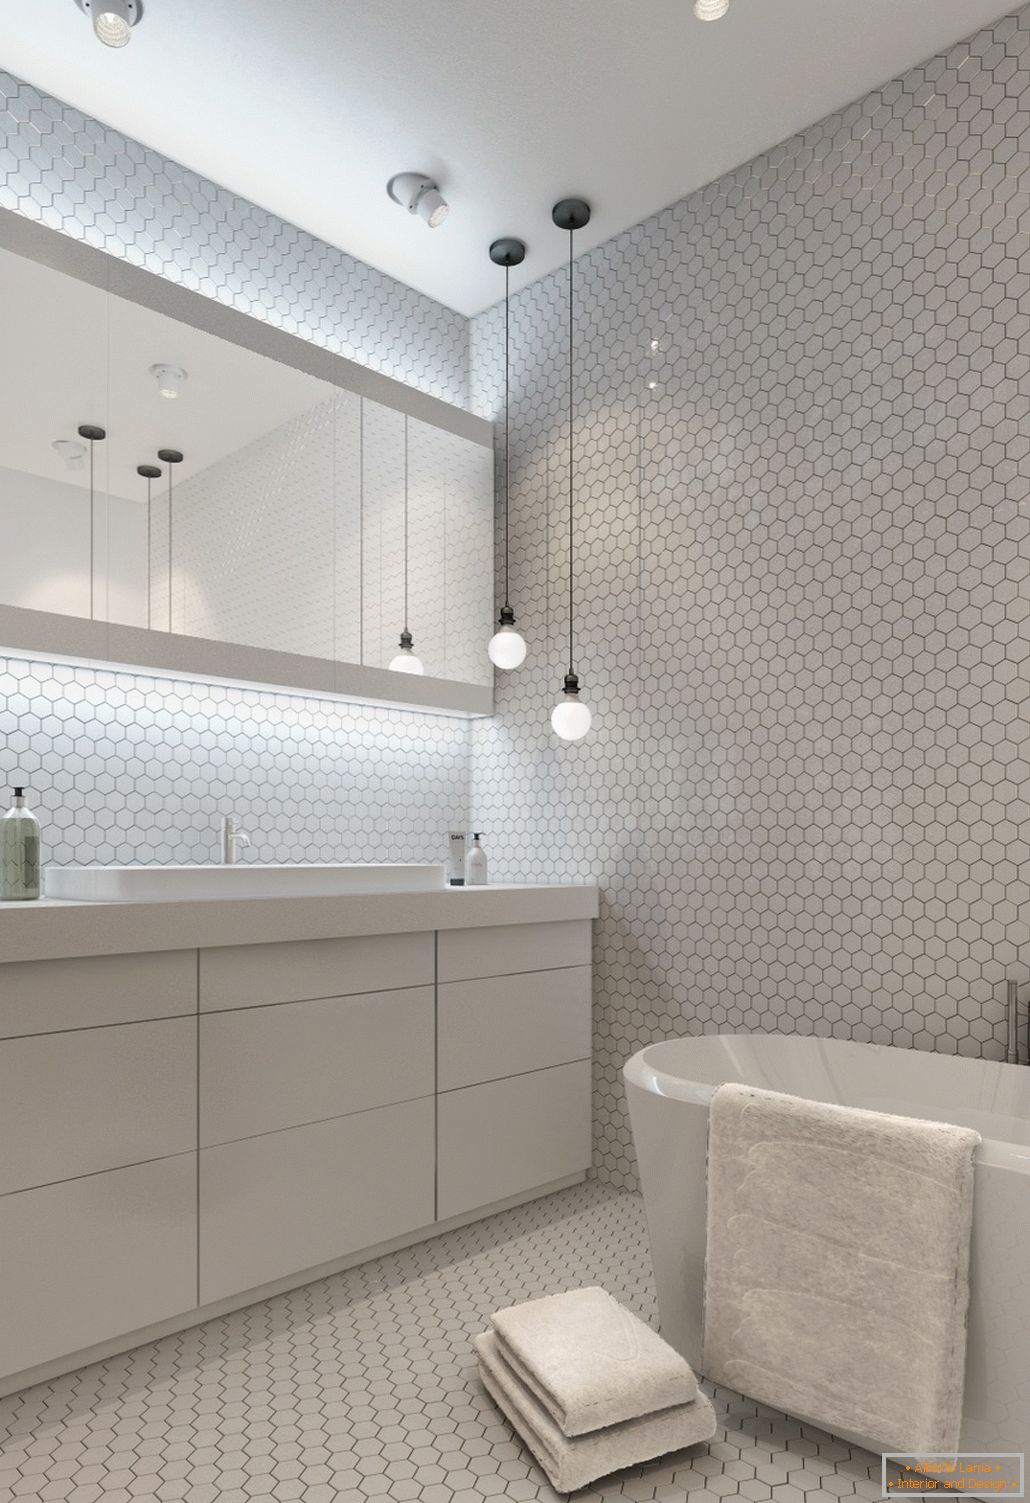 Design a white bathroom for a small apartment - фото 2